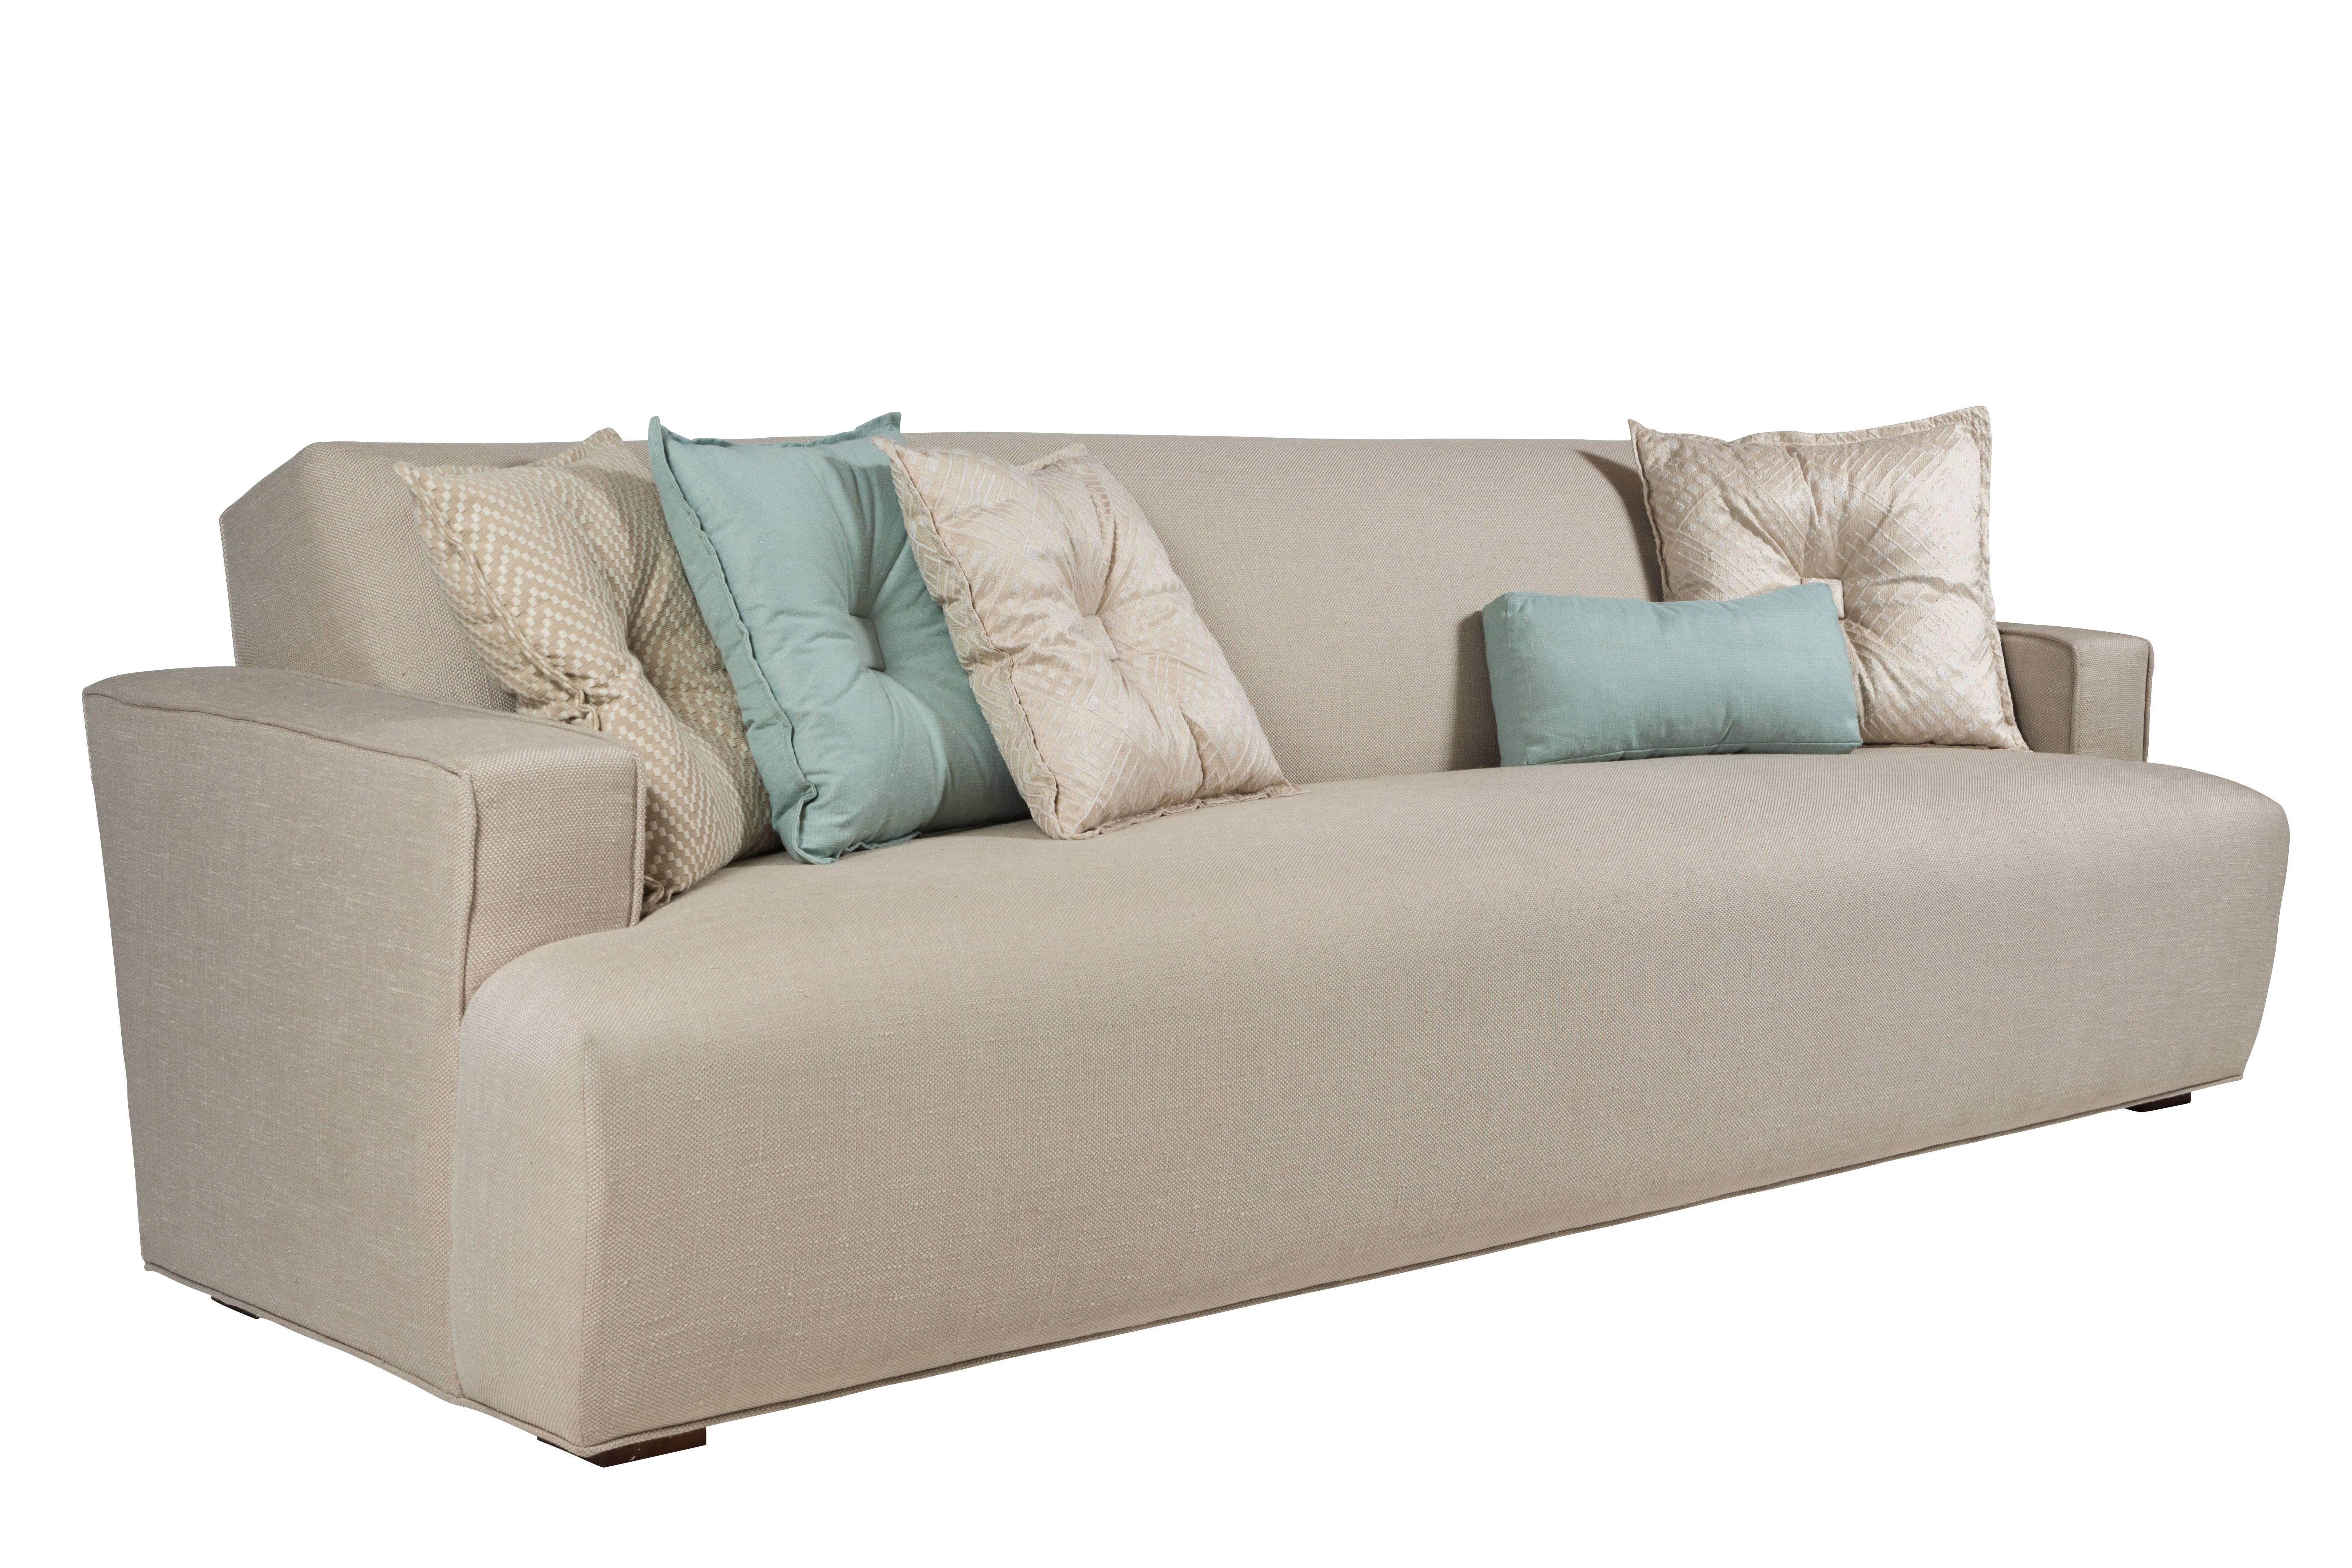 An elegant sofa designed by legendary midcentury Los Angeles designer and decorator, William 